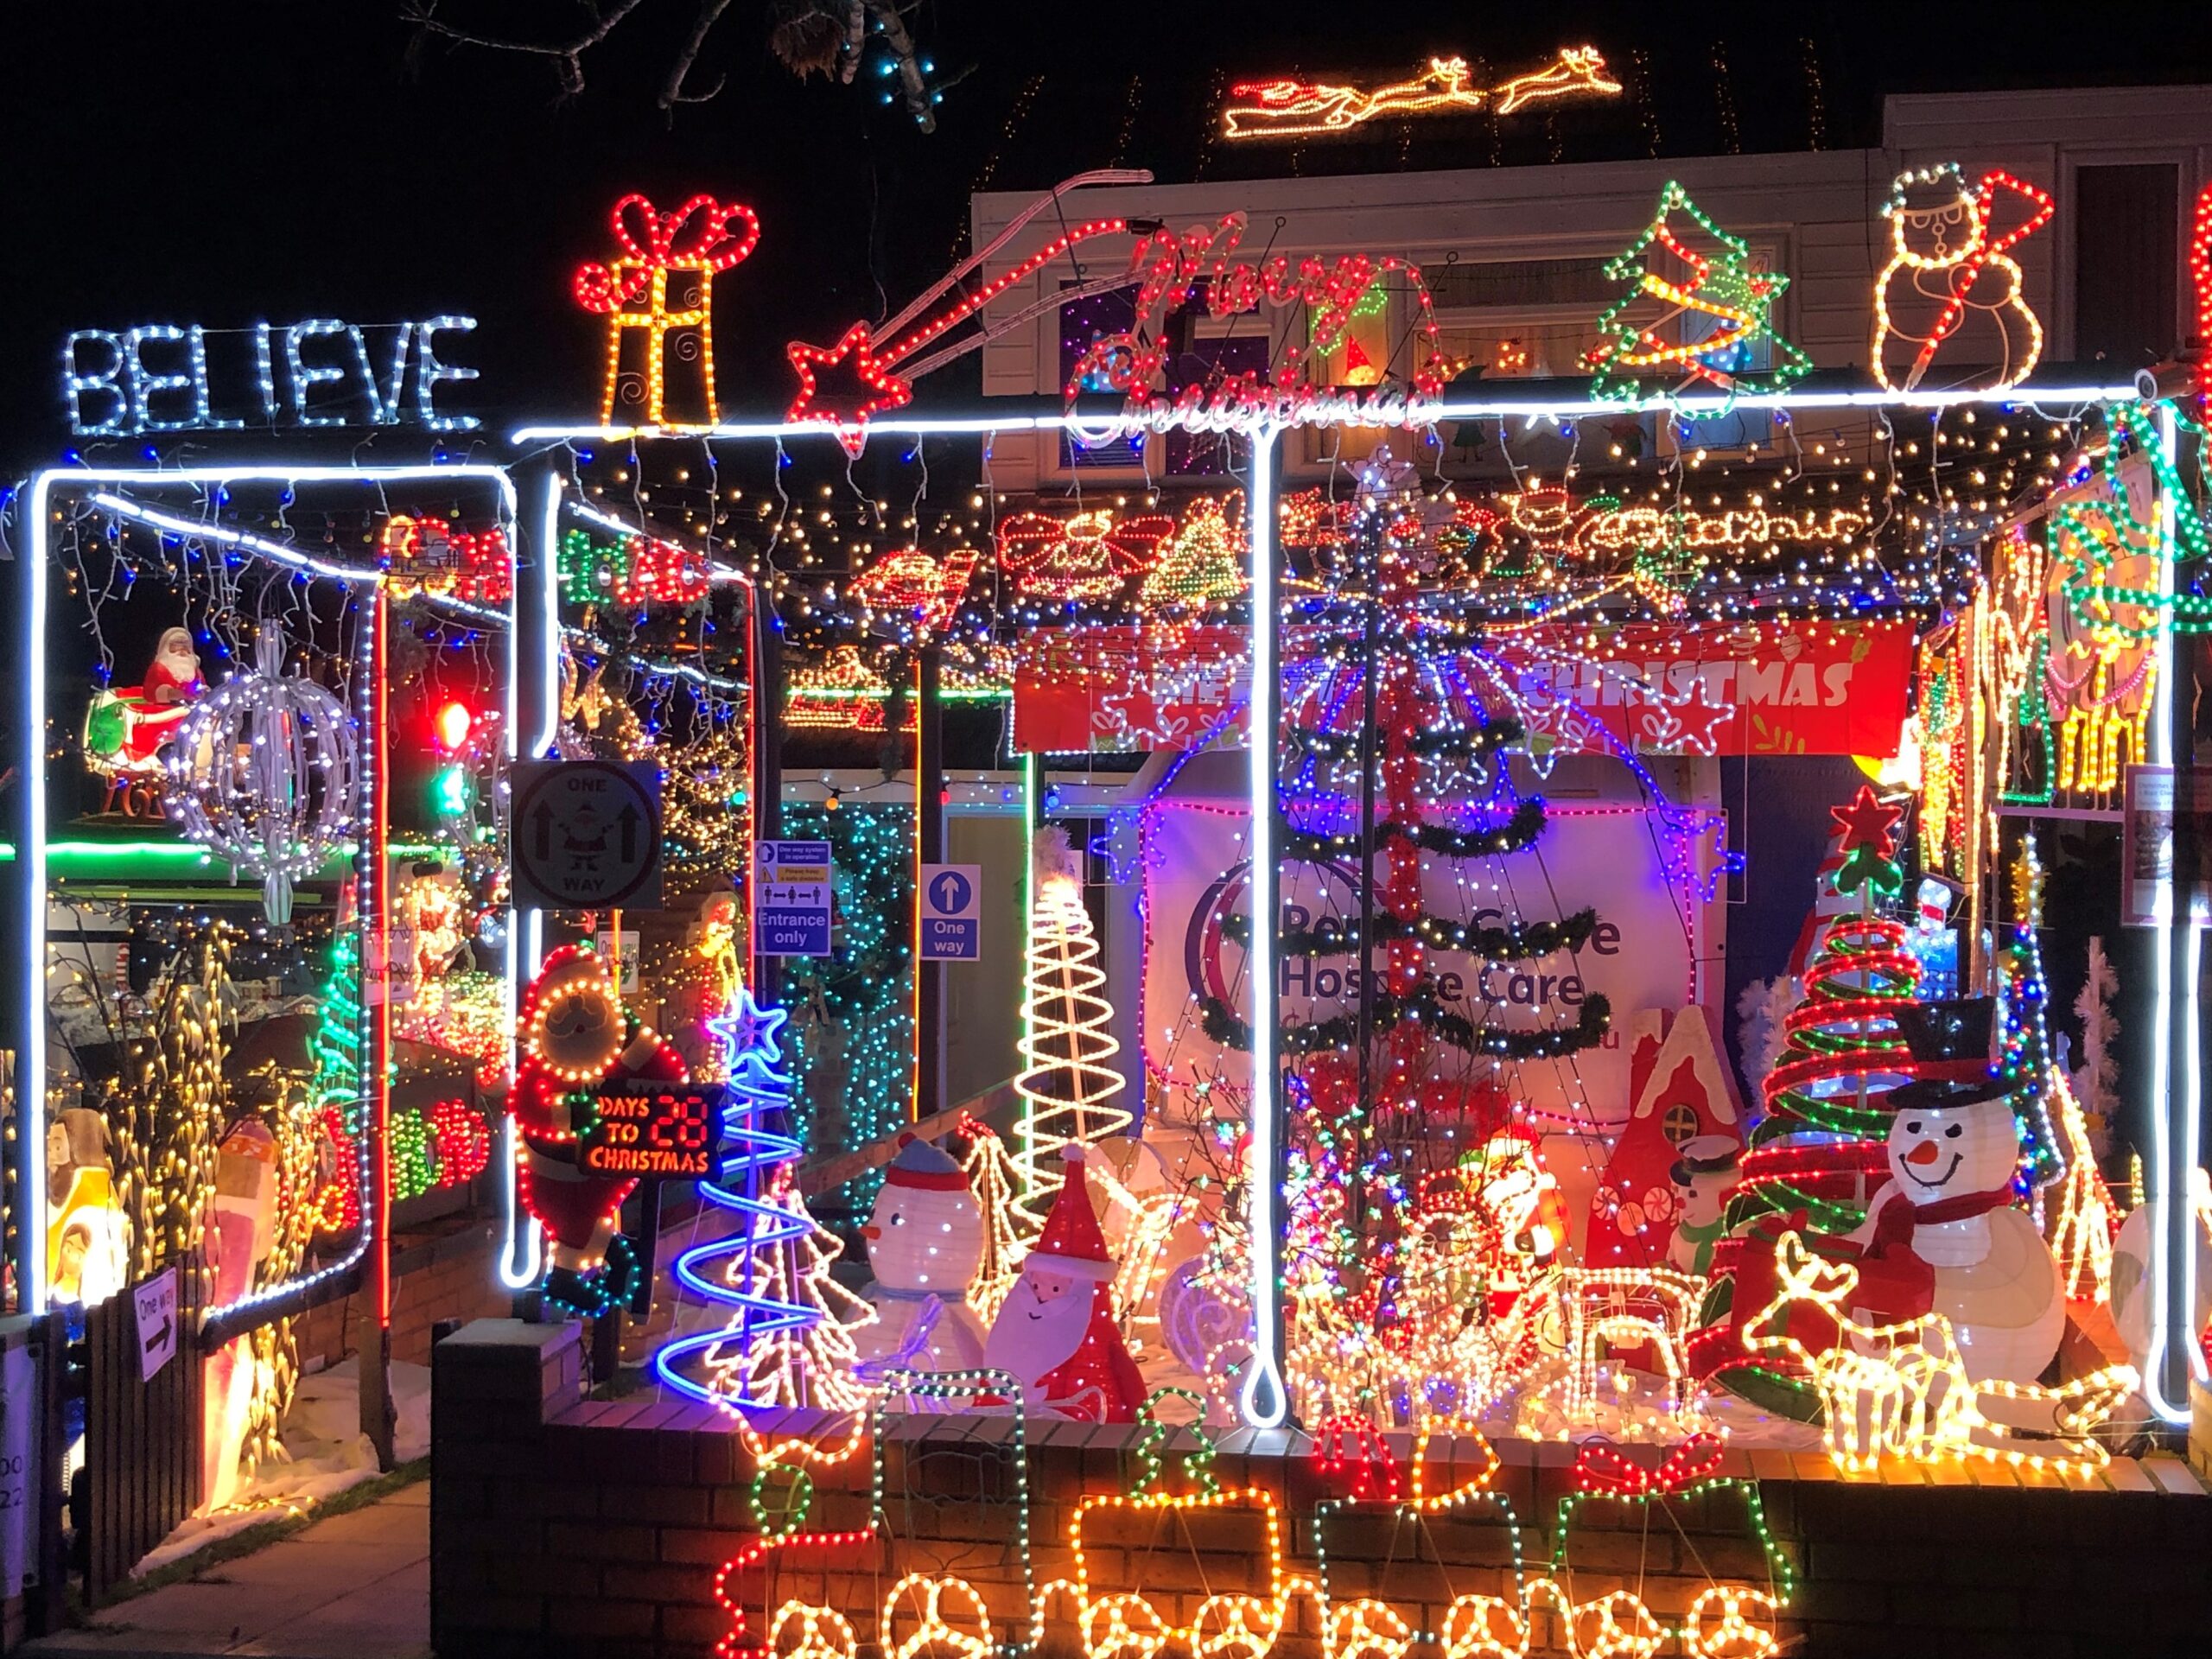 Local companies save charity Christmas lights display